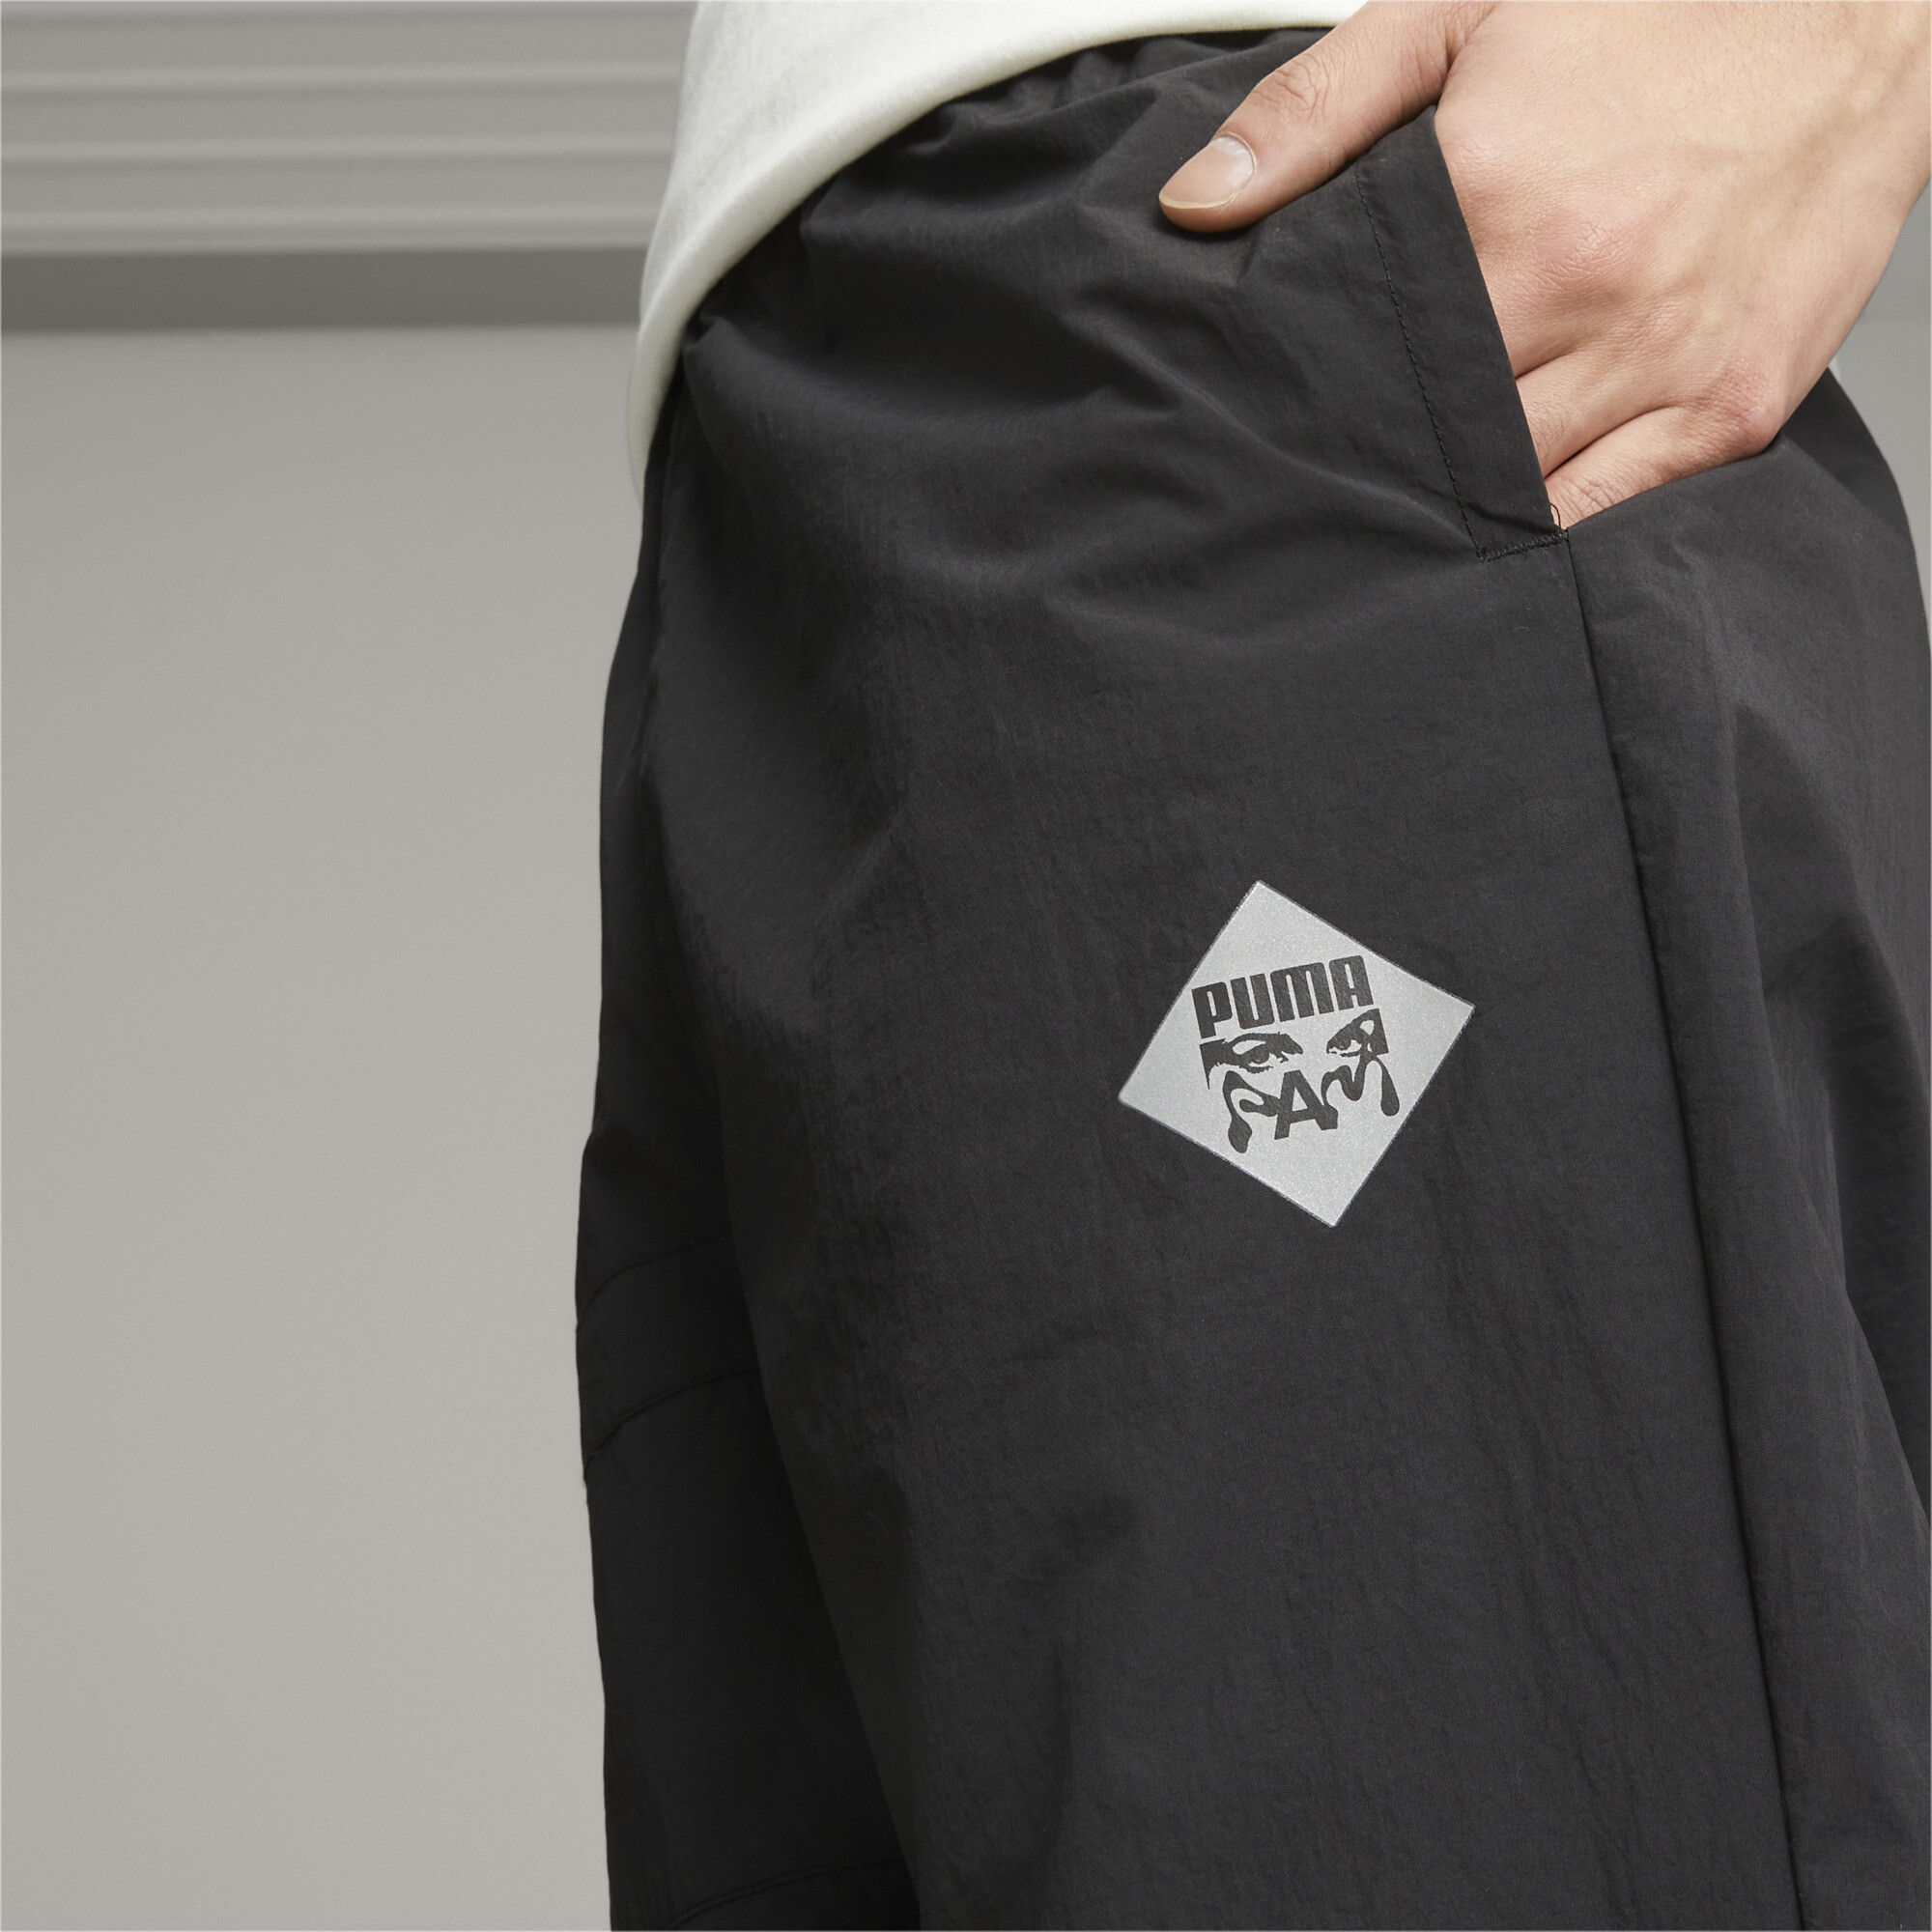 Men's PUMA X PERKS AND MINI Woven Pants In Black, Size Large